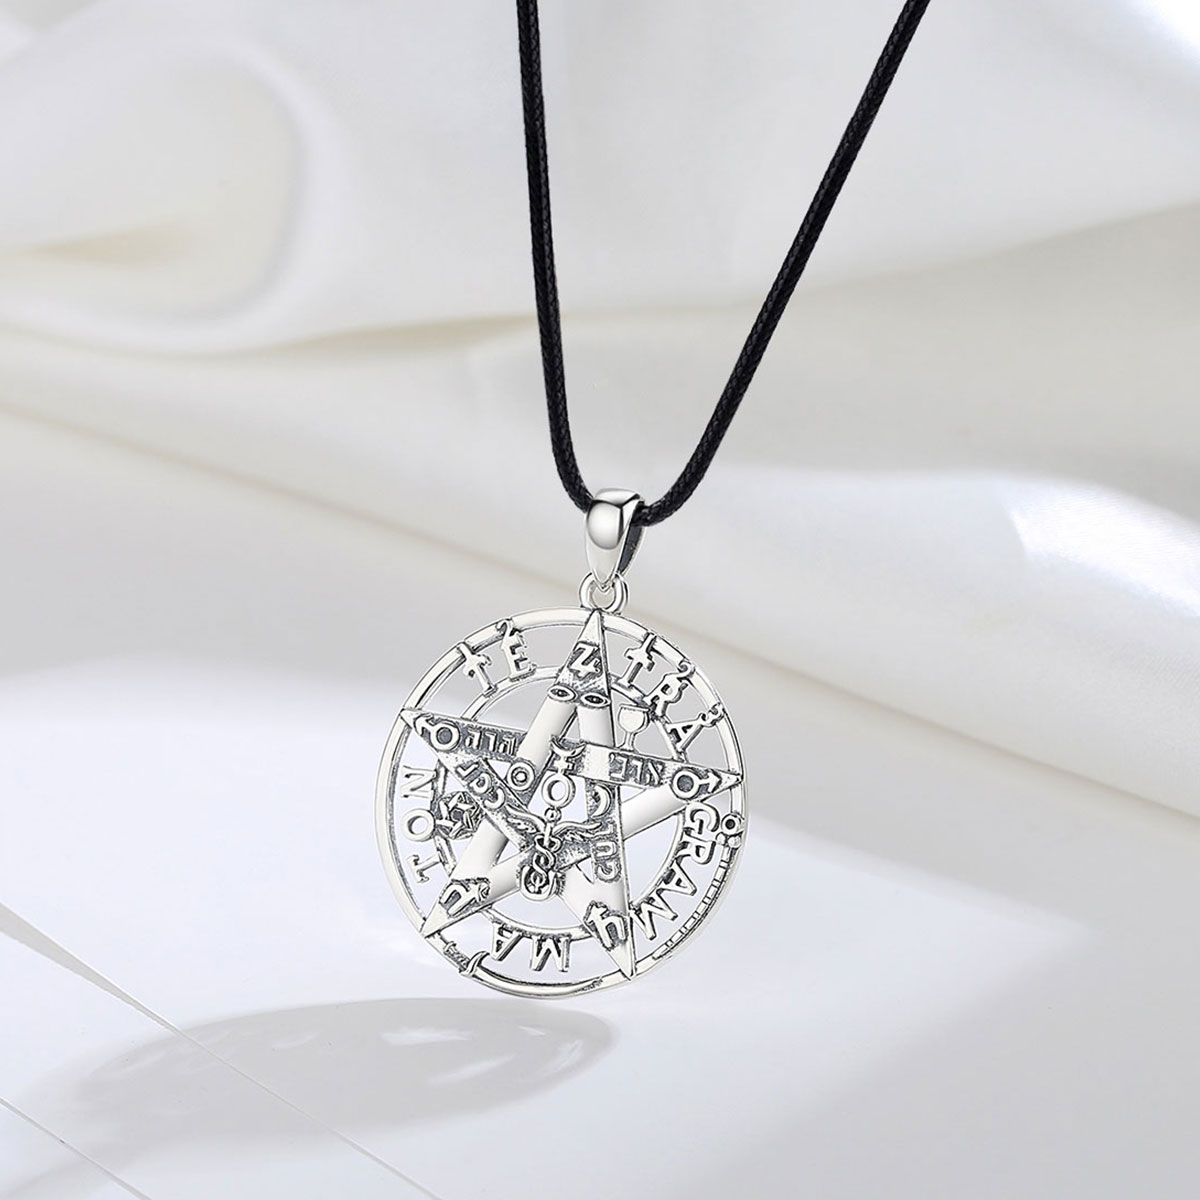 Pentagram Tetragramaton Pendant Original Design S925 Sterling Silver Necklaces